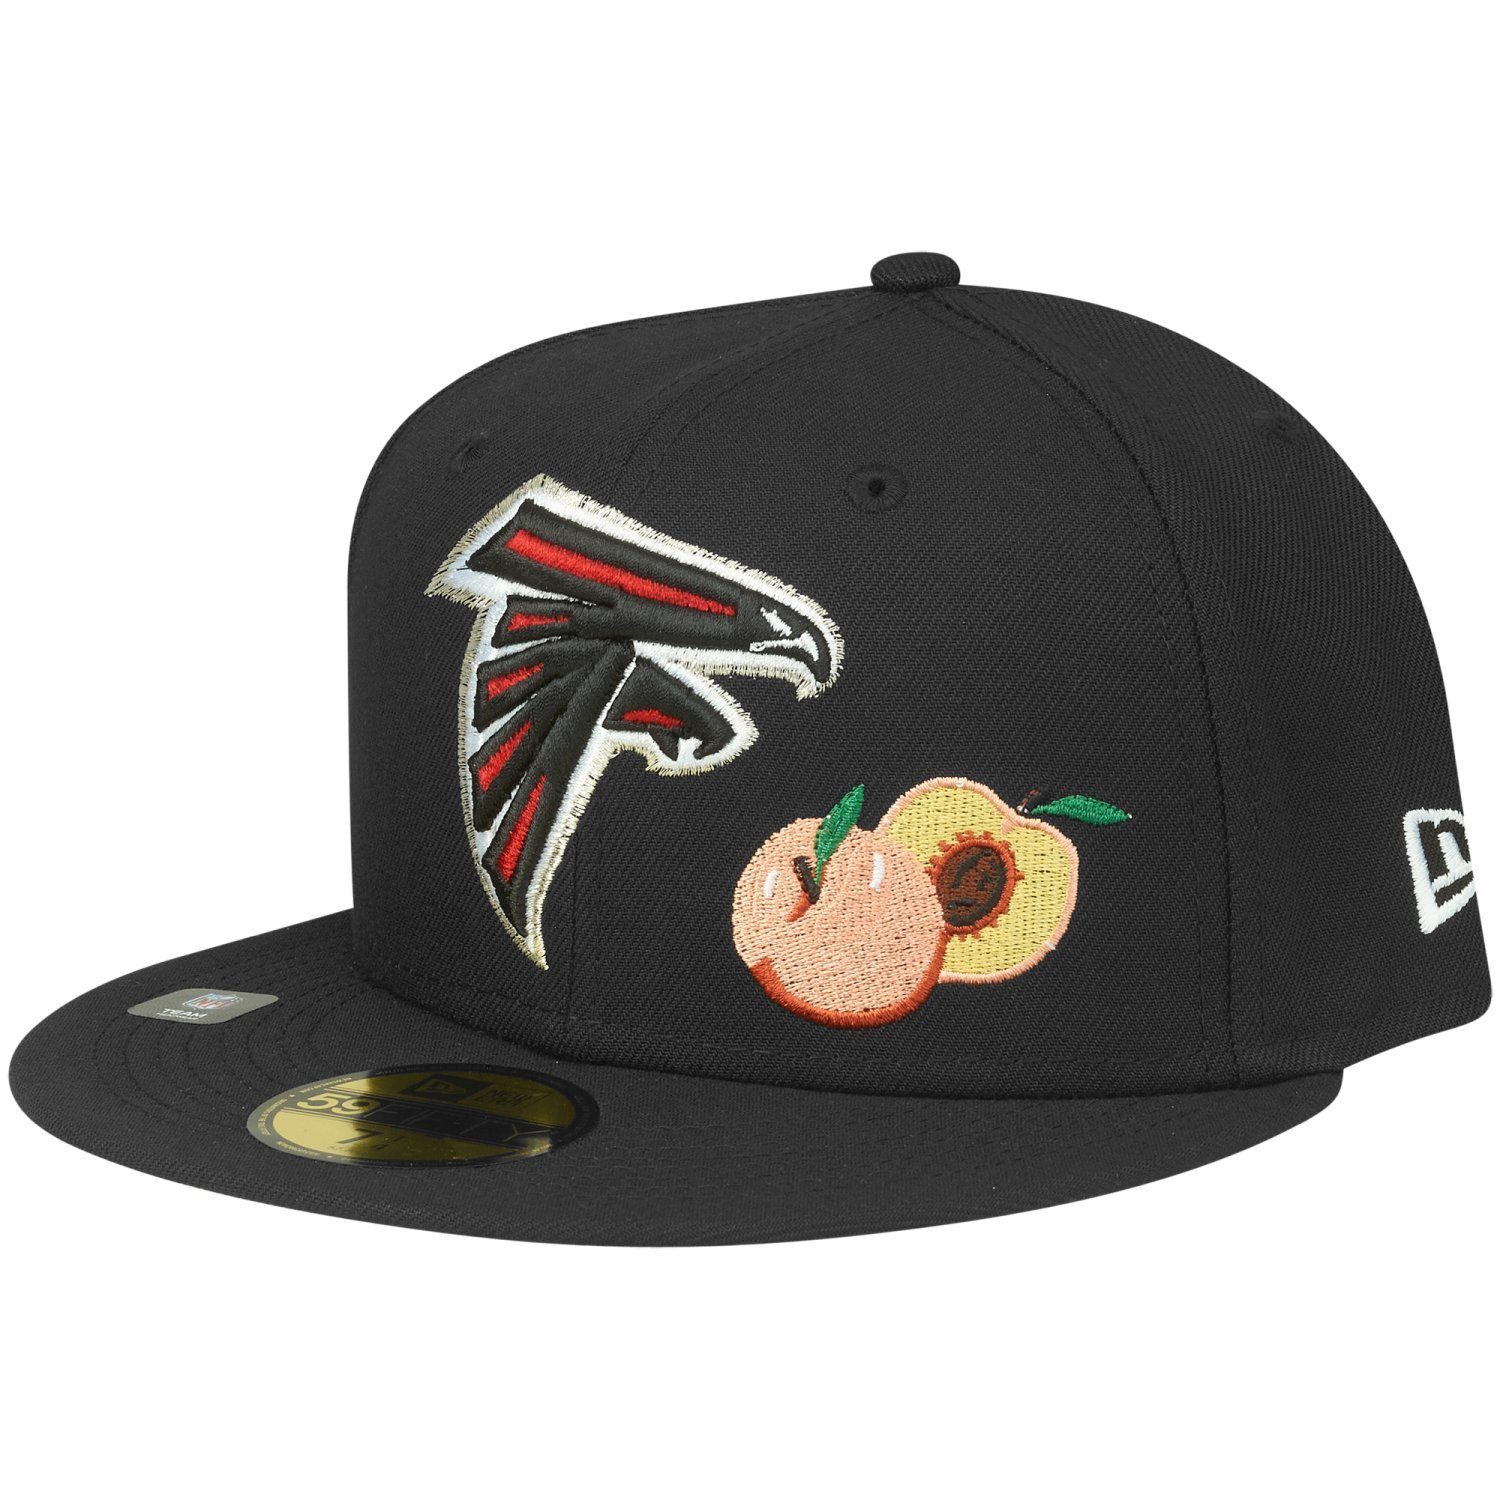 New Era Fitted Cap 59Fifty NFL CITY Atlanta Falcons